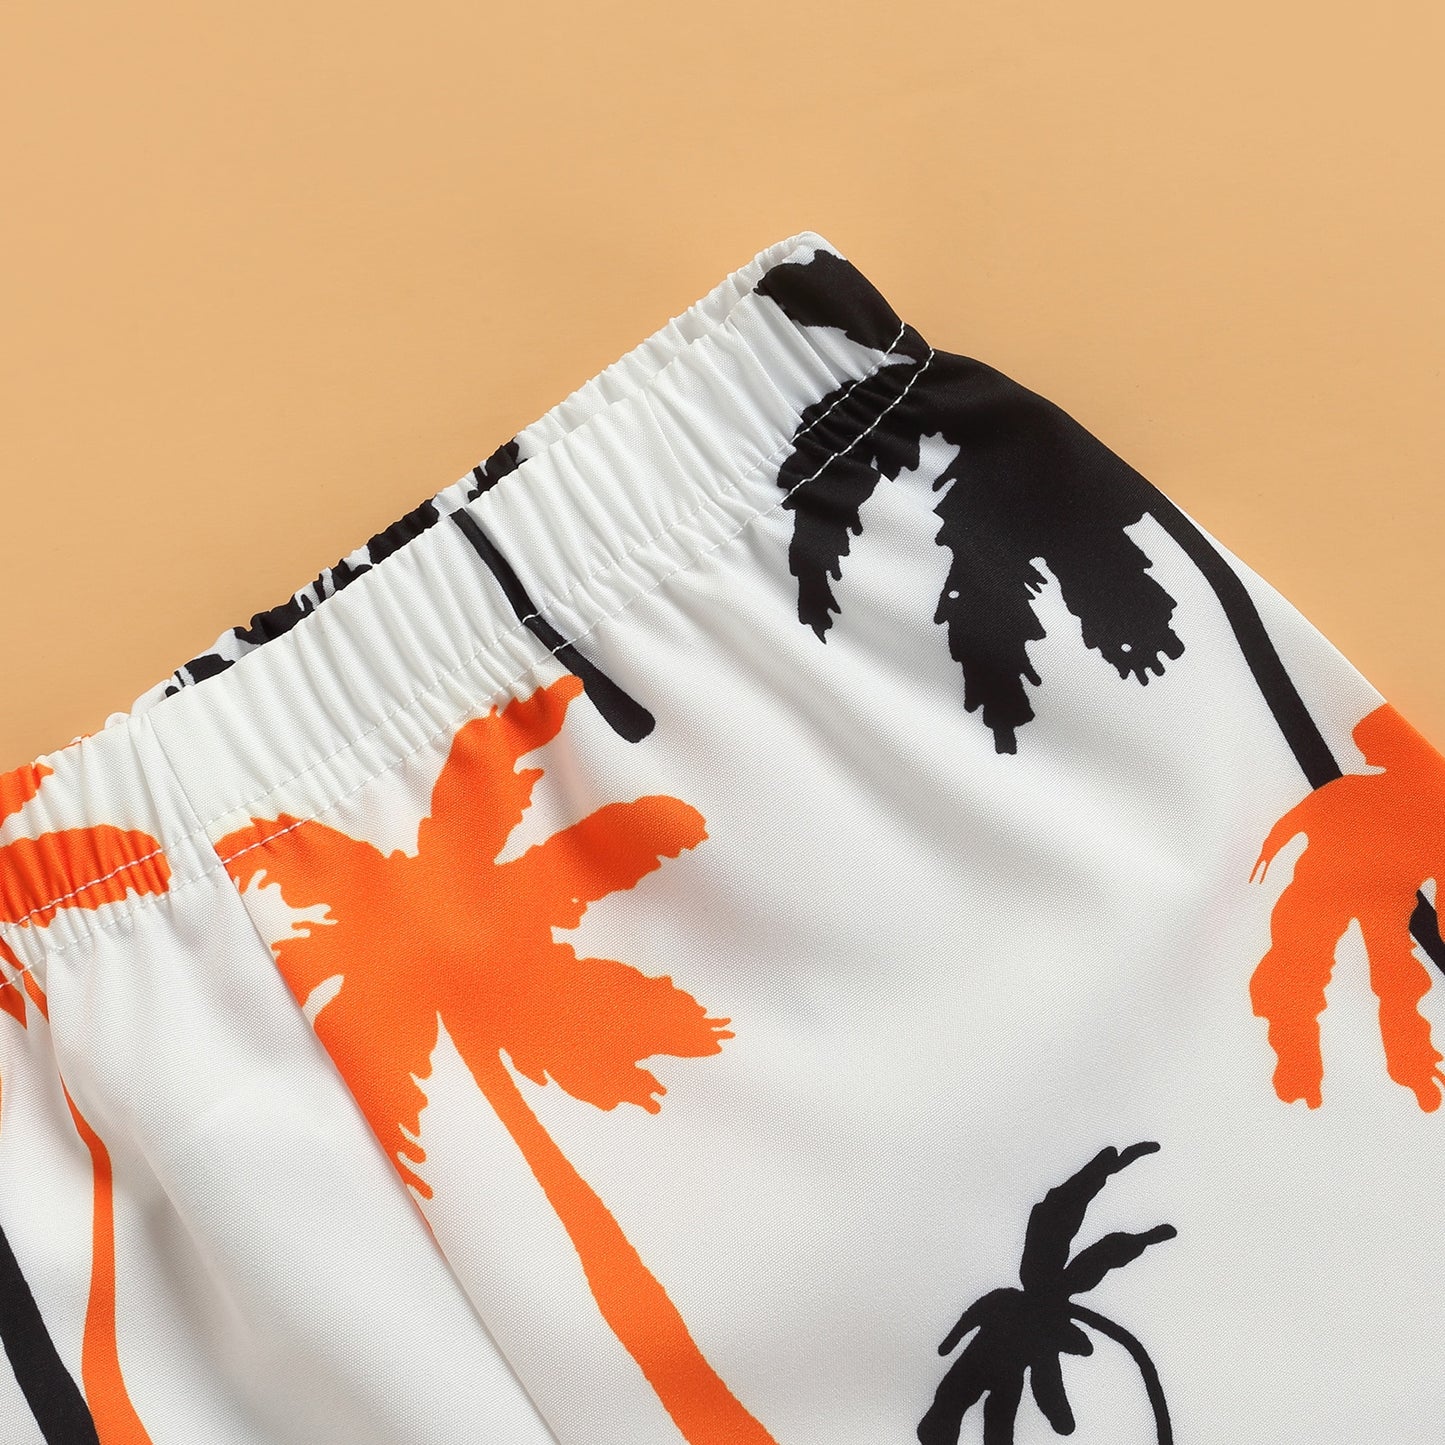 Beach Print Shirt + Shorts